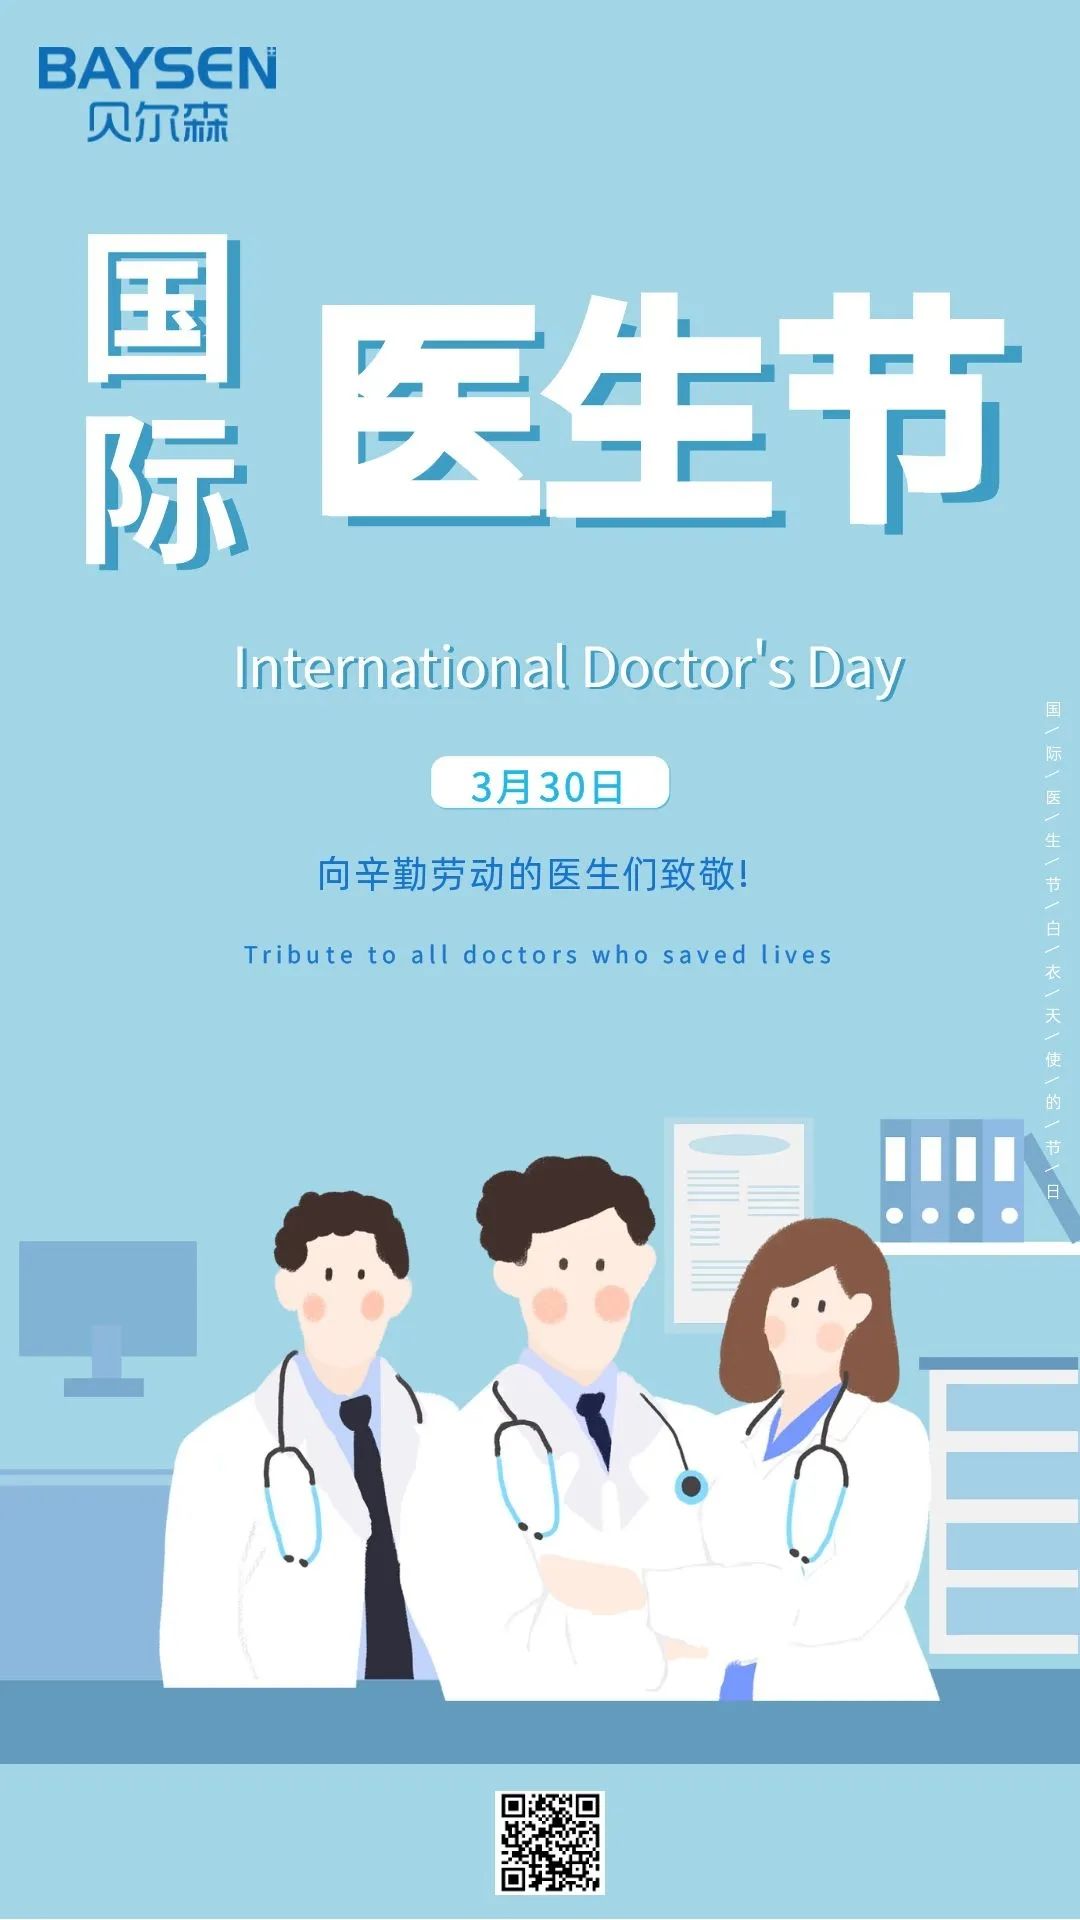 International Doctor's Day